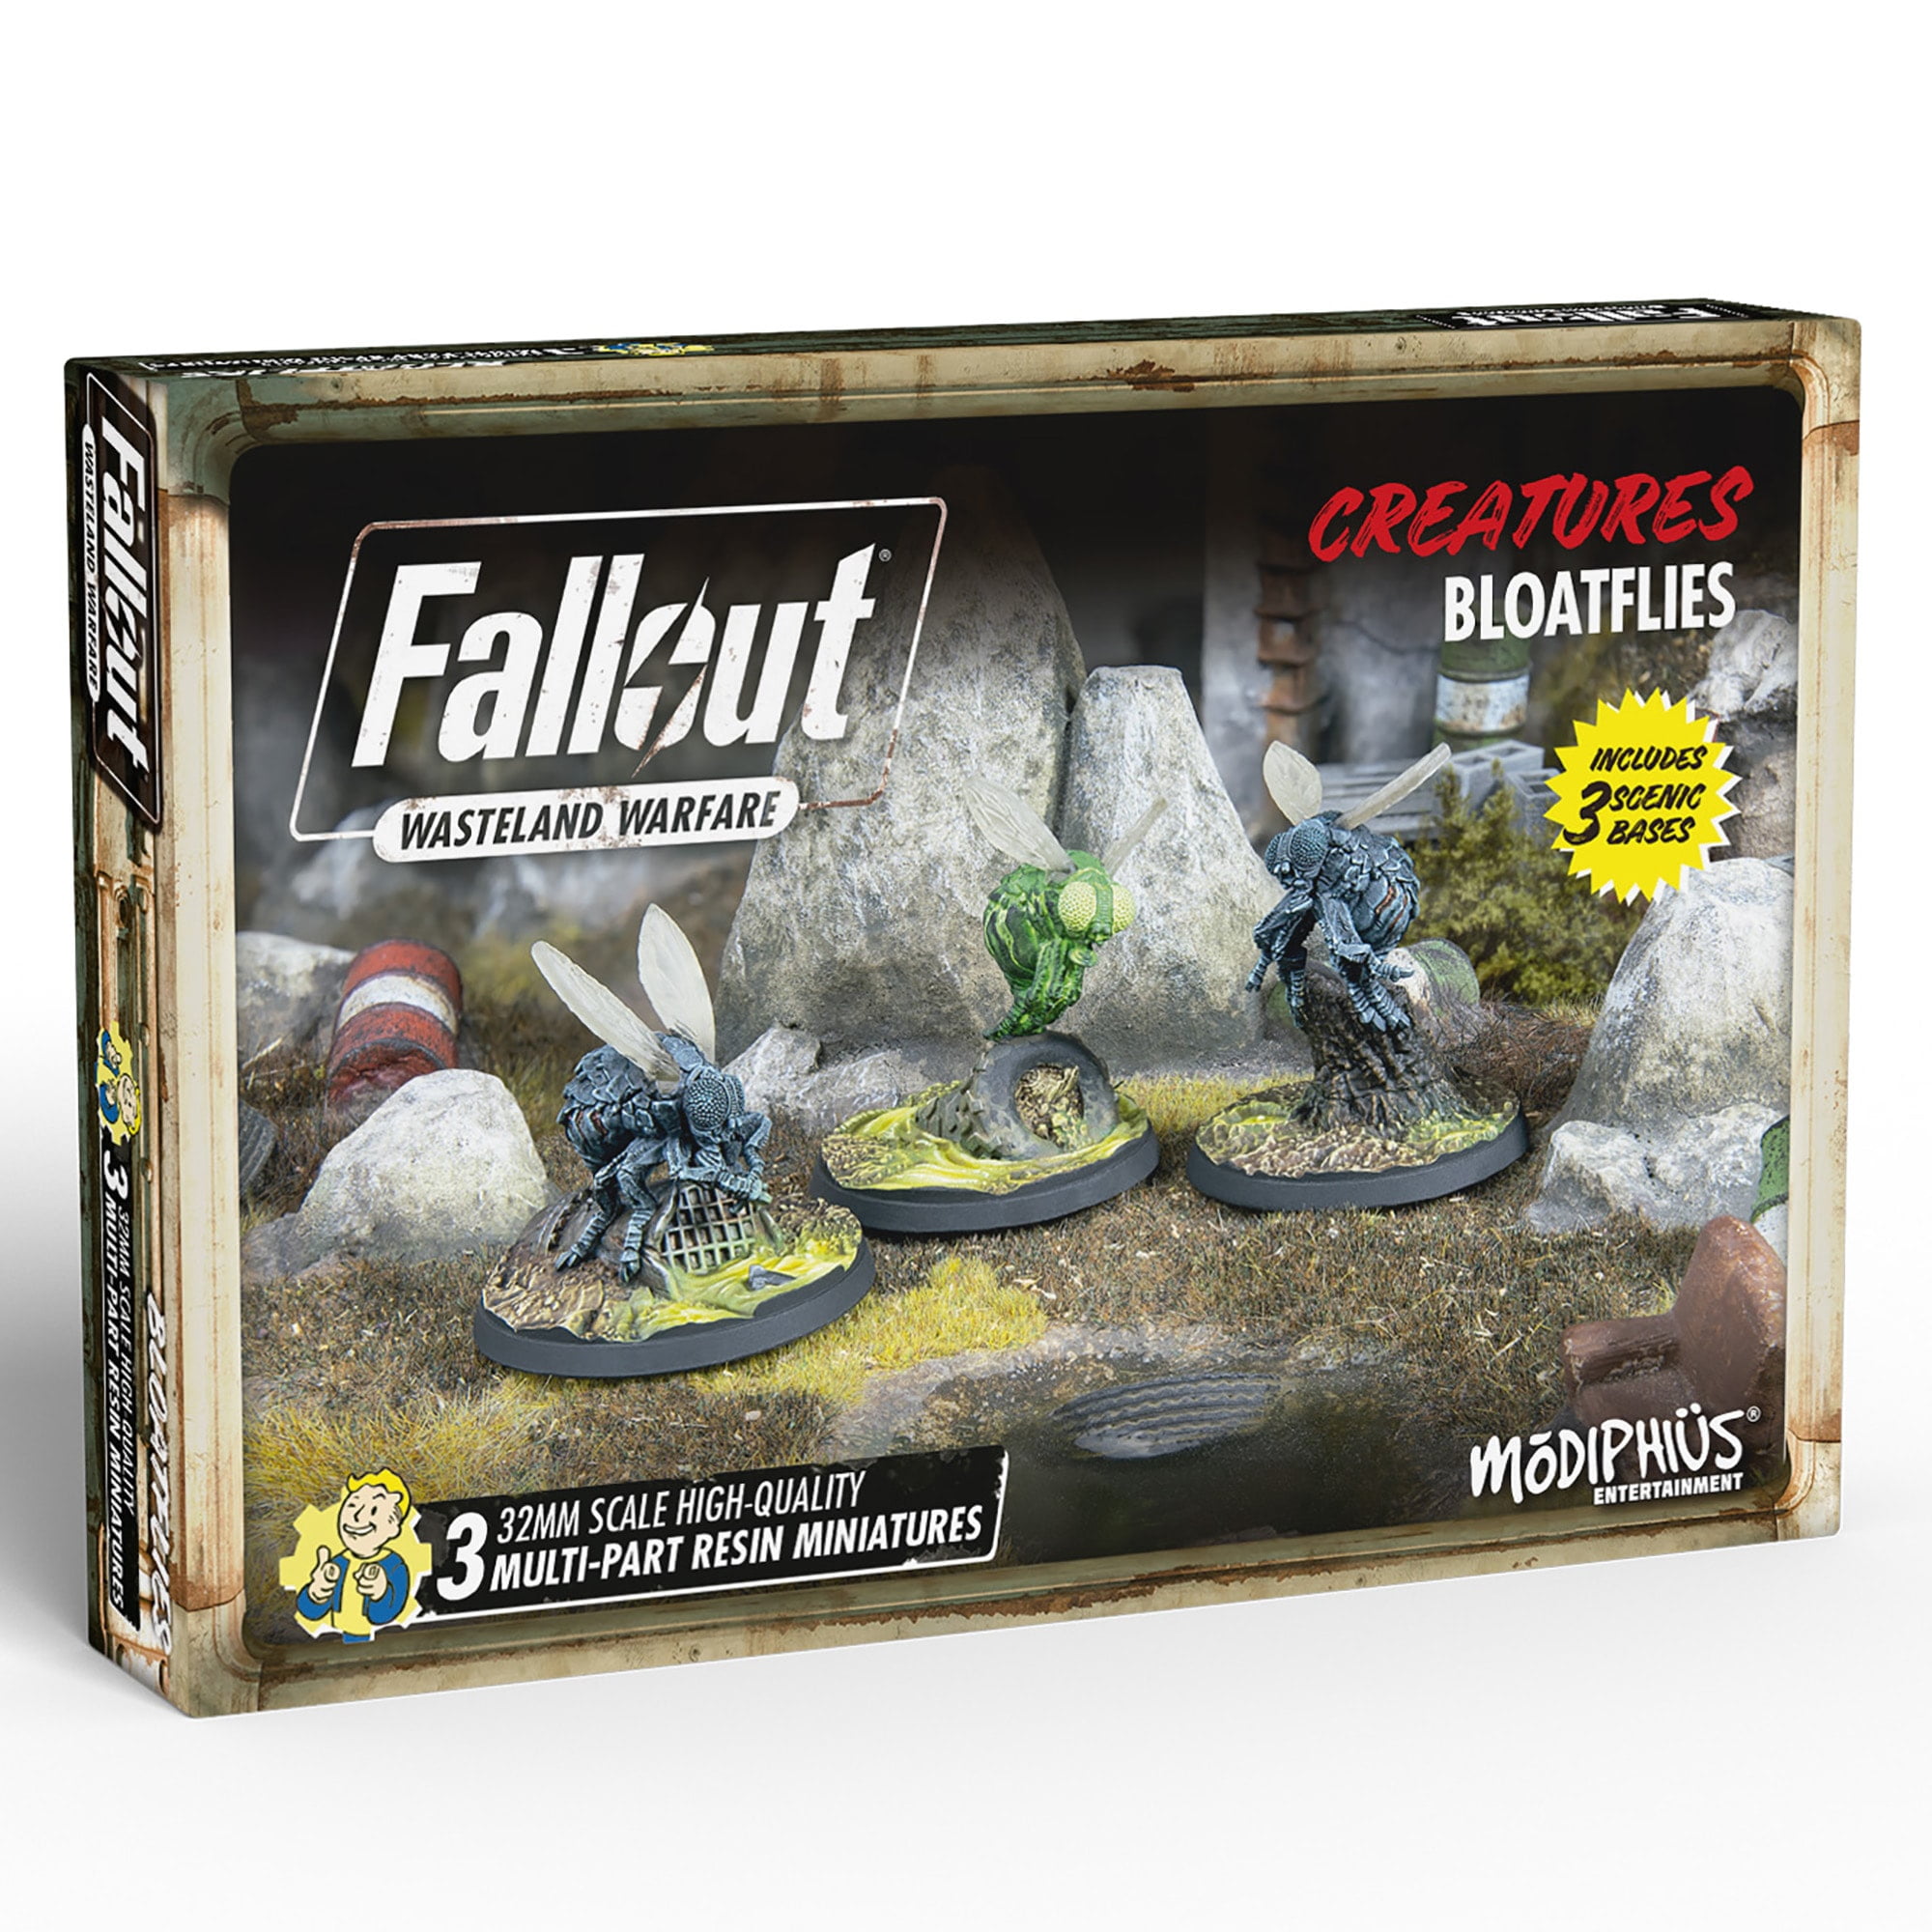 Picture of Modiphius Entertainment MUH052287 Fallout Wasteland Warfare Creatures Bloatflies Figurine